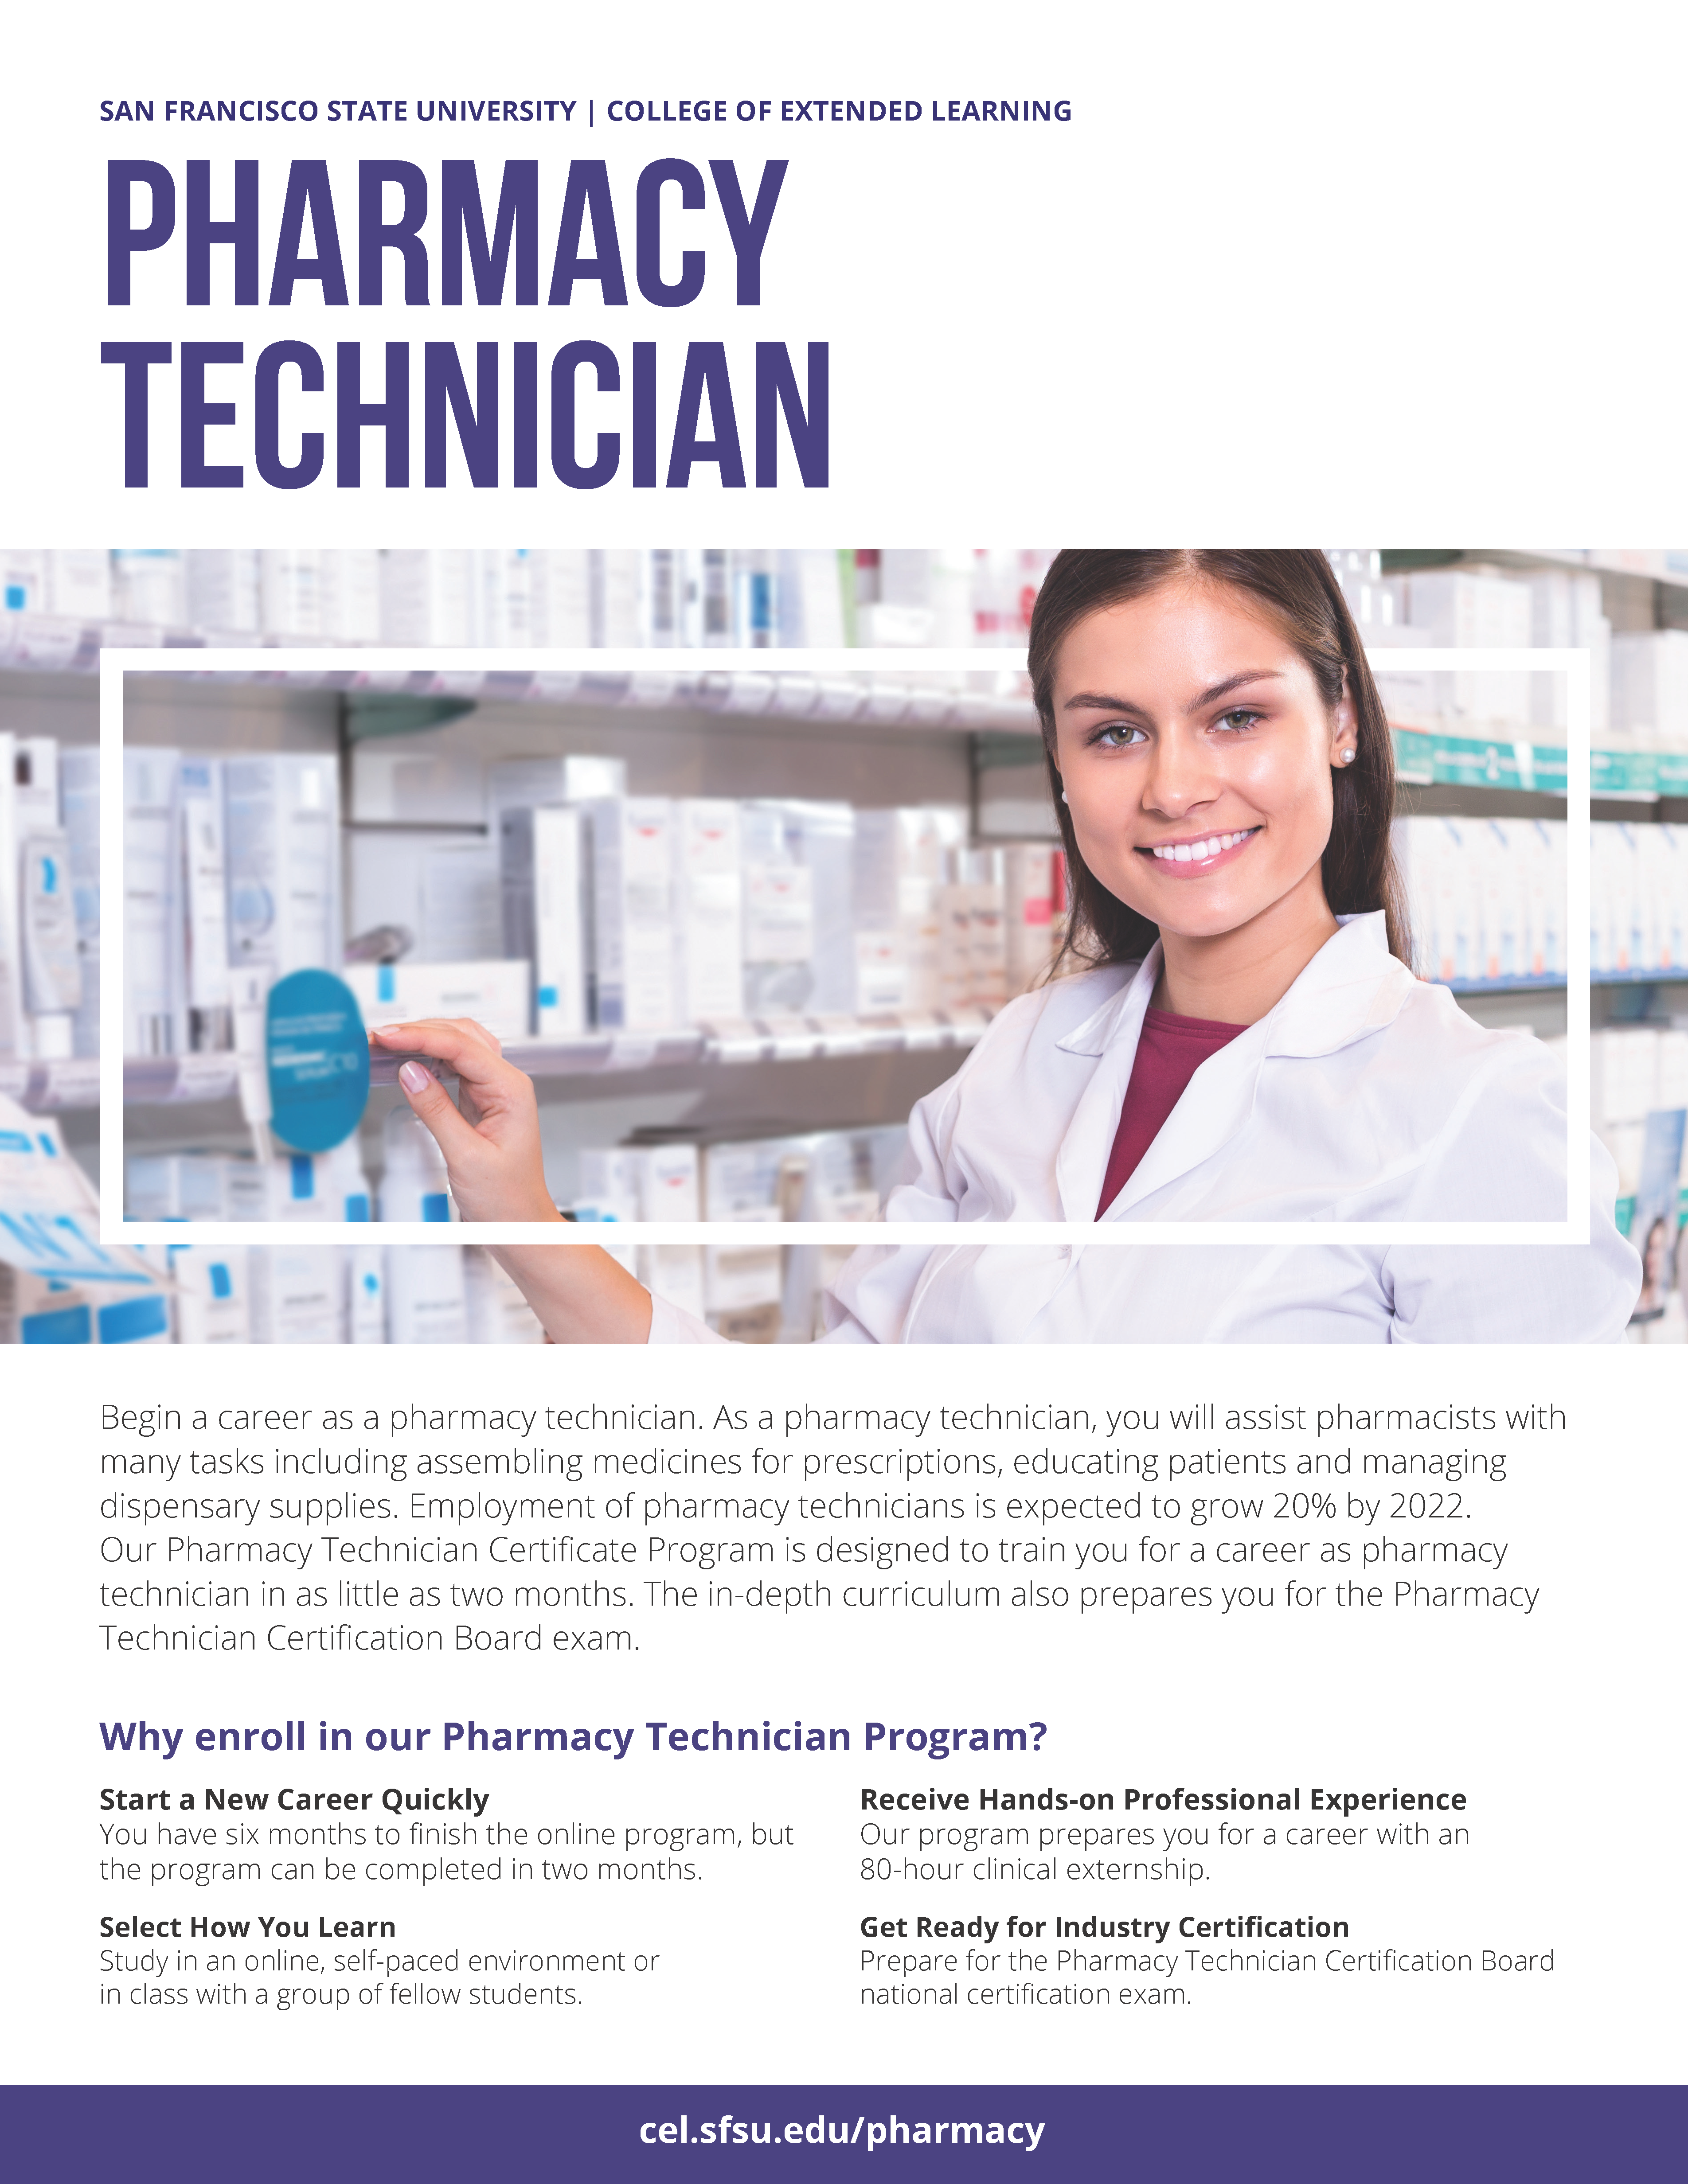 Pharmacy Technician brochure